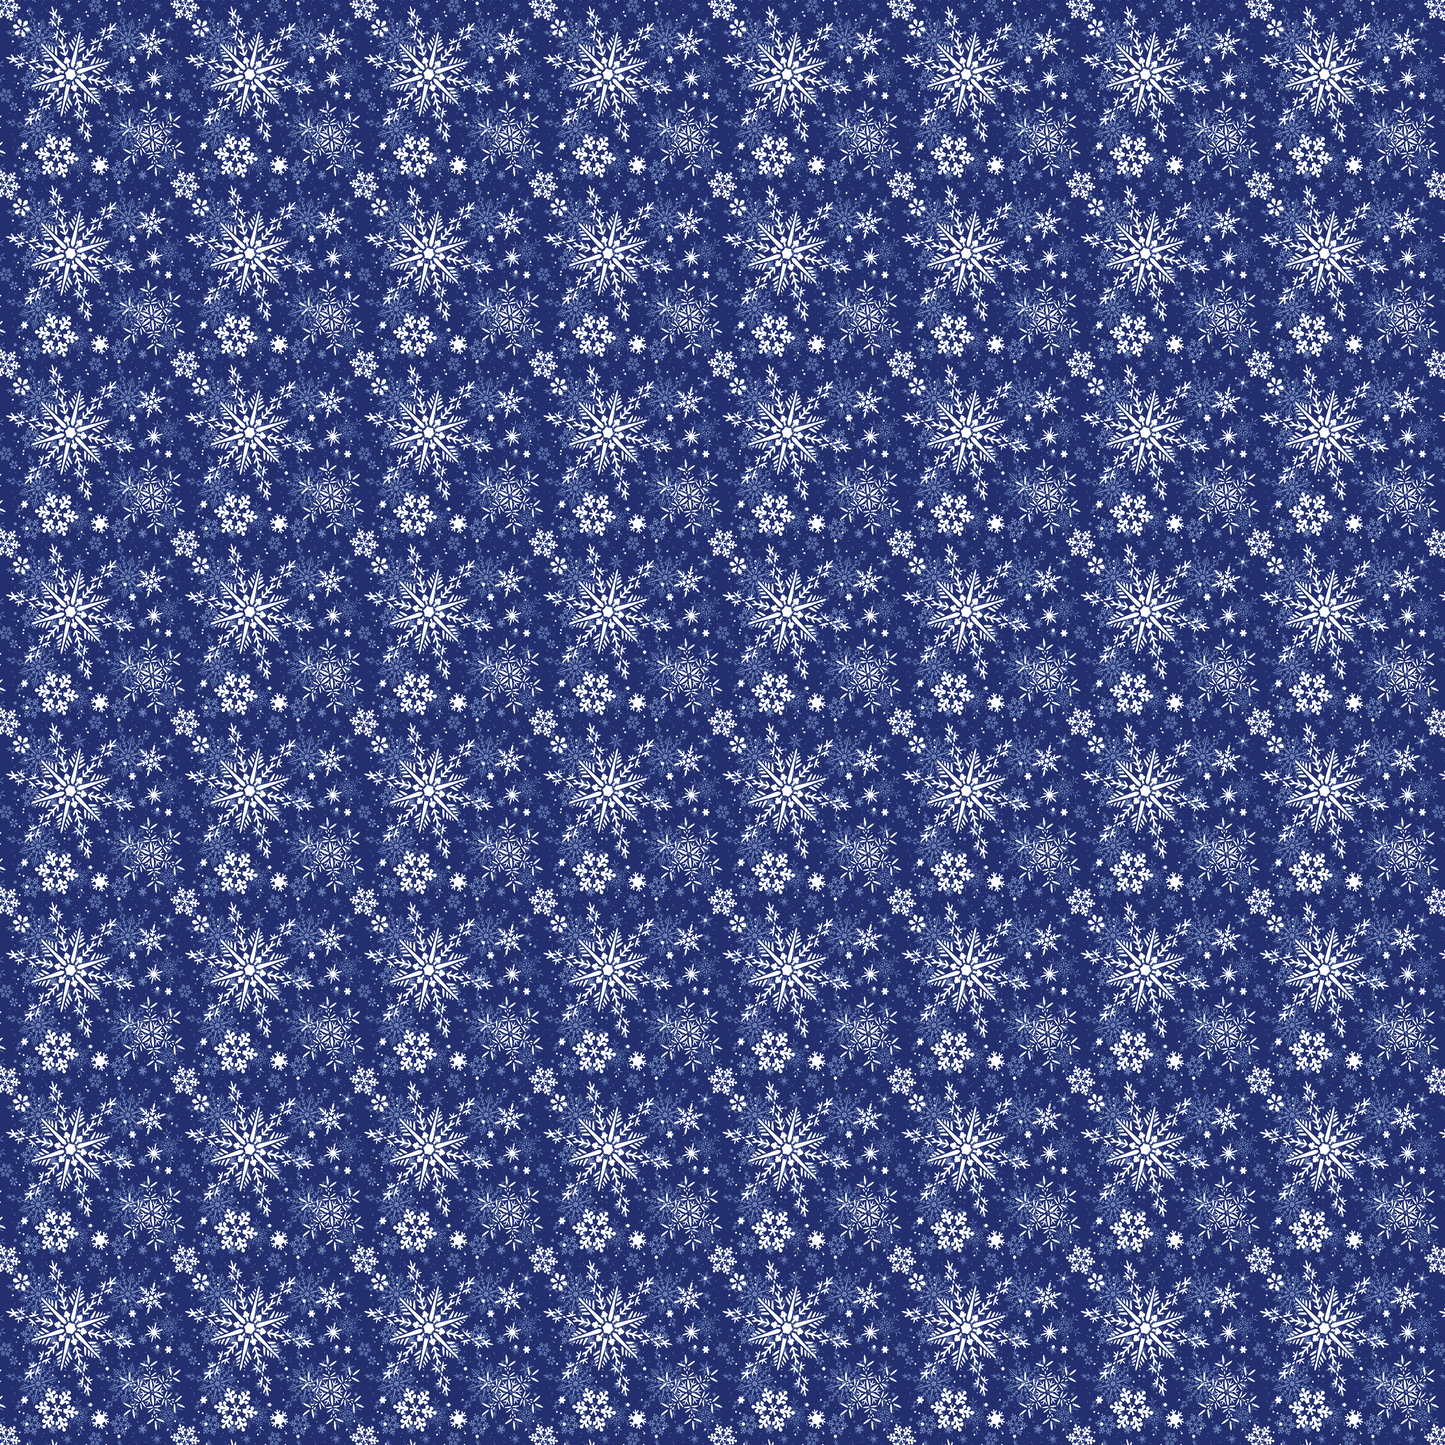 White Snowflakes on a Blue Background 012